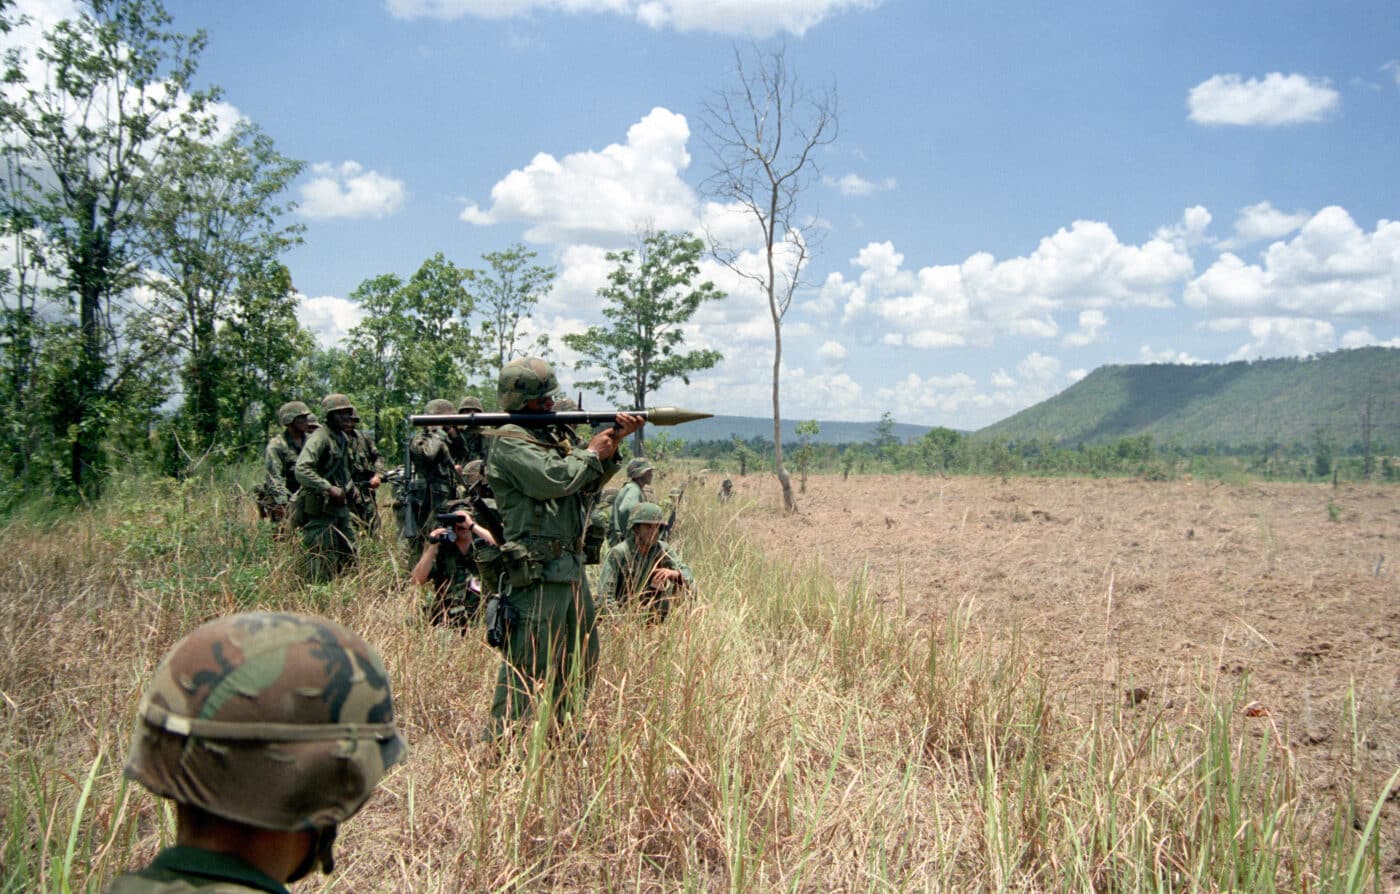 RPG-2 being tested by US troops